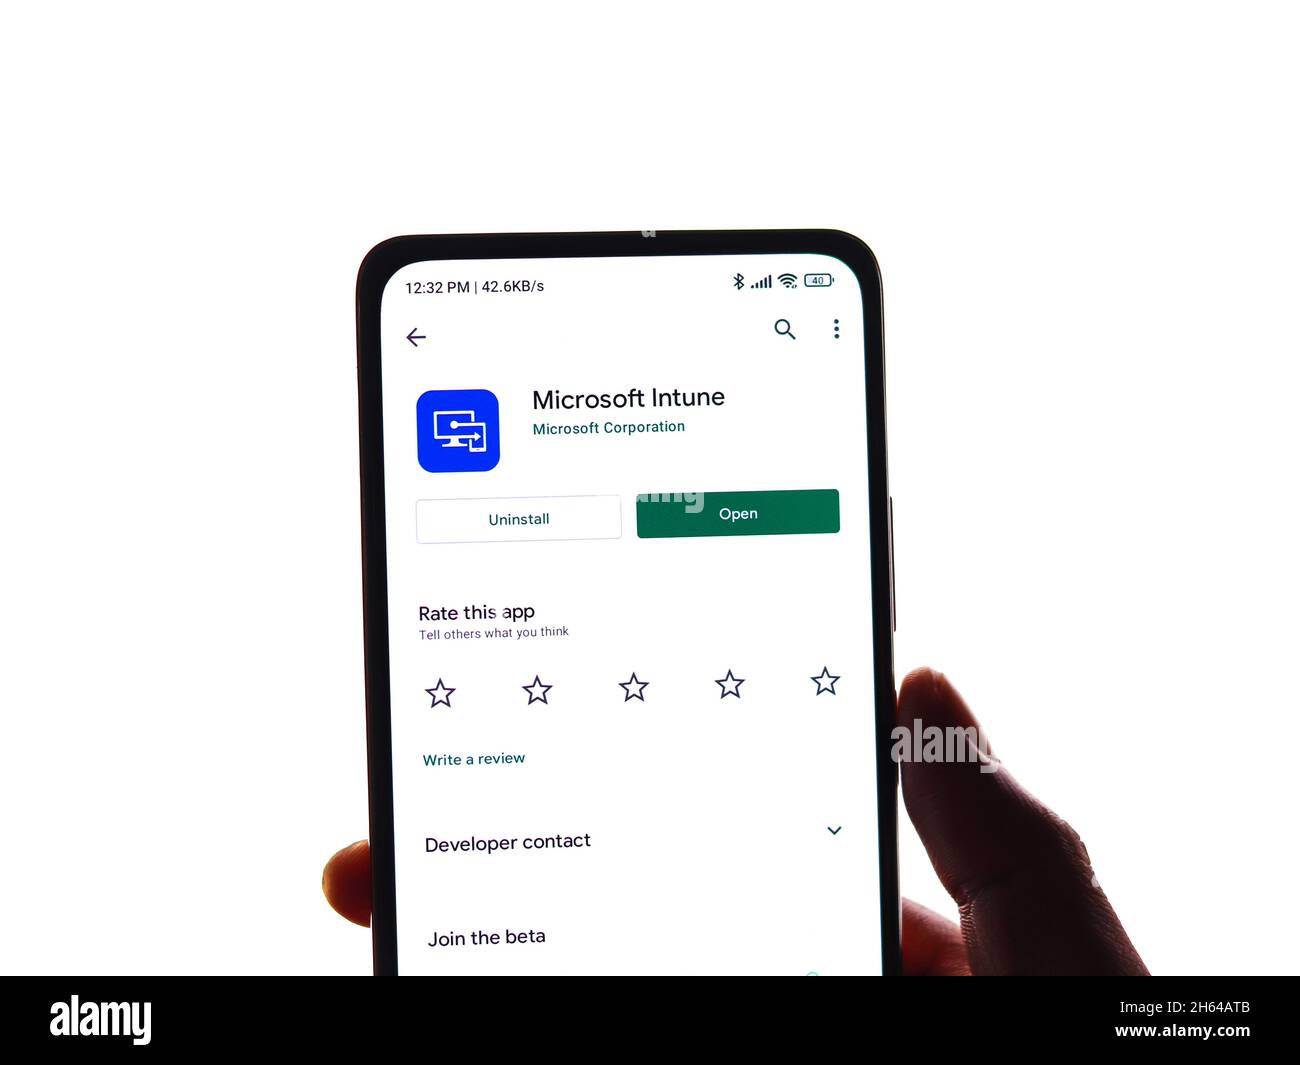 West Bangal, India - November 11, 2021 : Microsoft Intune logo on phone screen stock image. Stock Photo